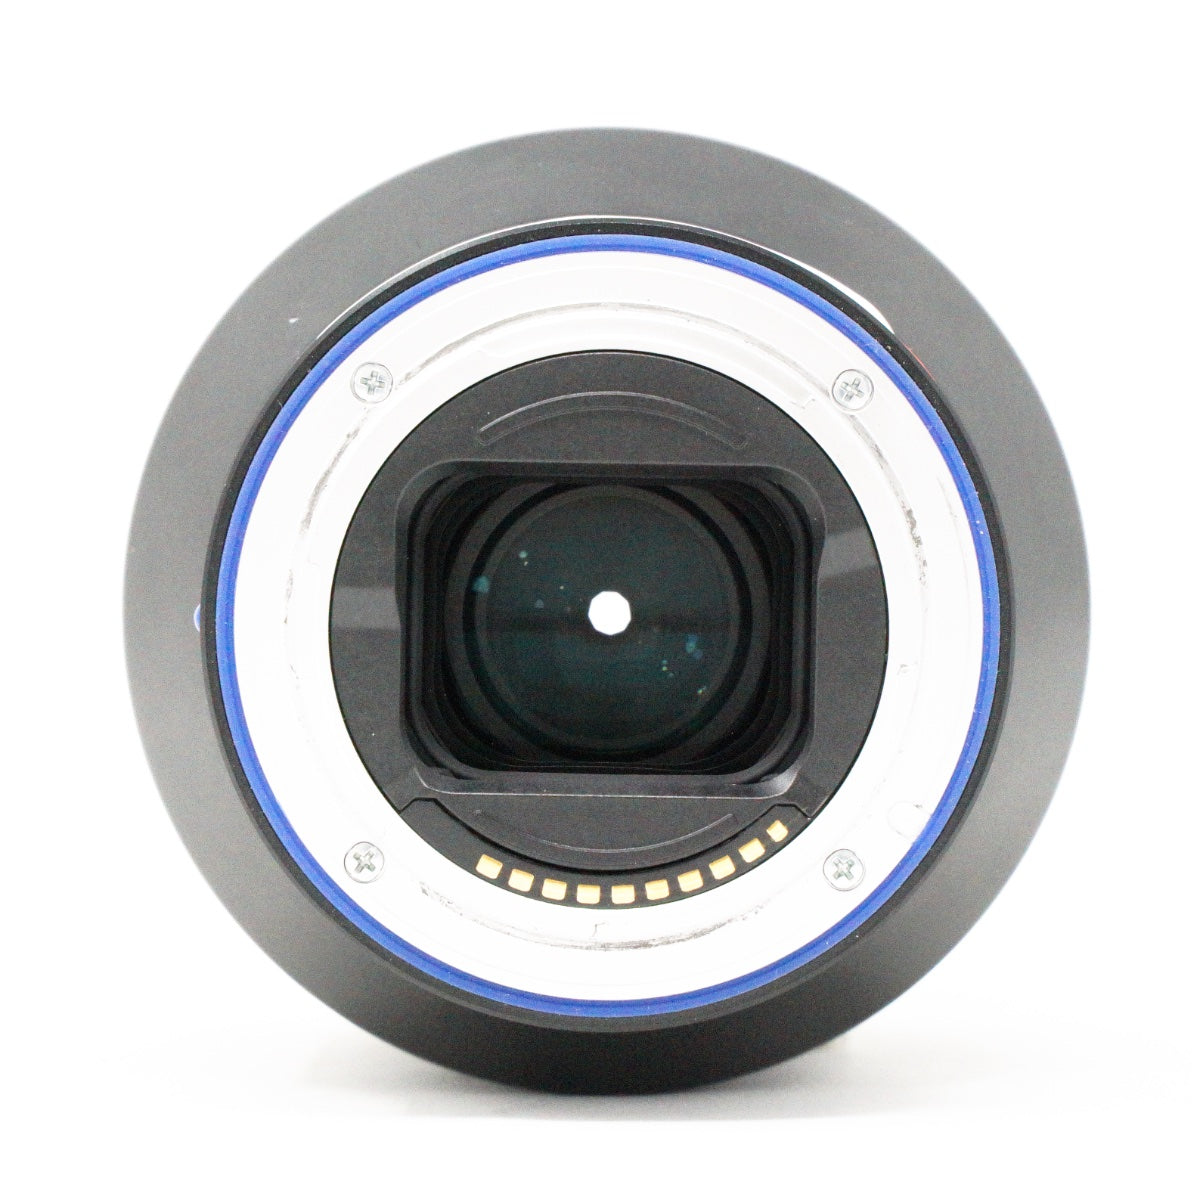 Used Zeiss Batis 85mm F1.8 Sony E mount Lens